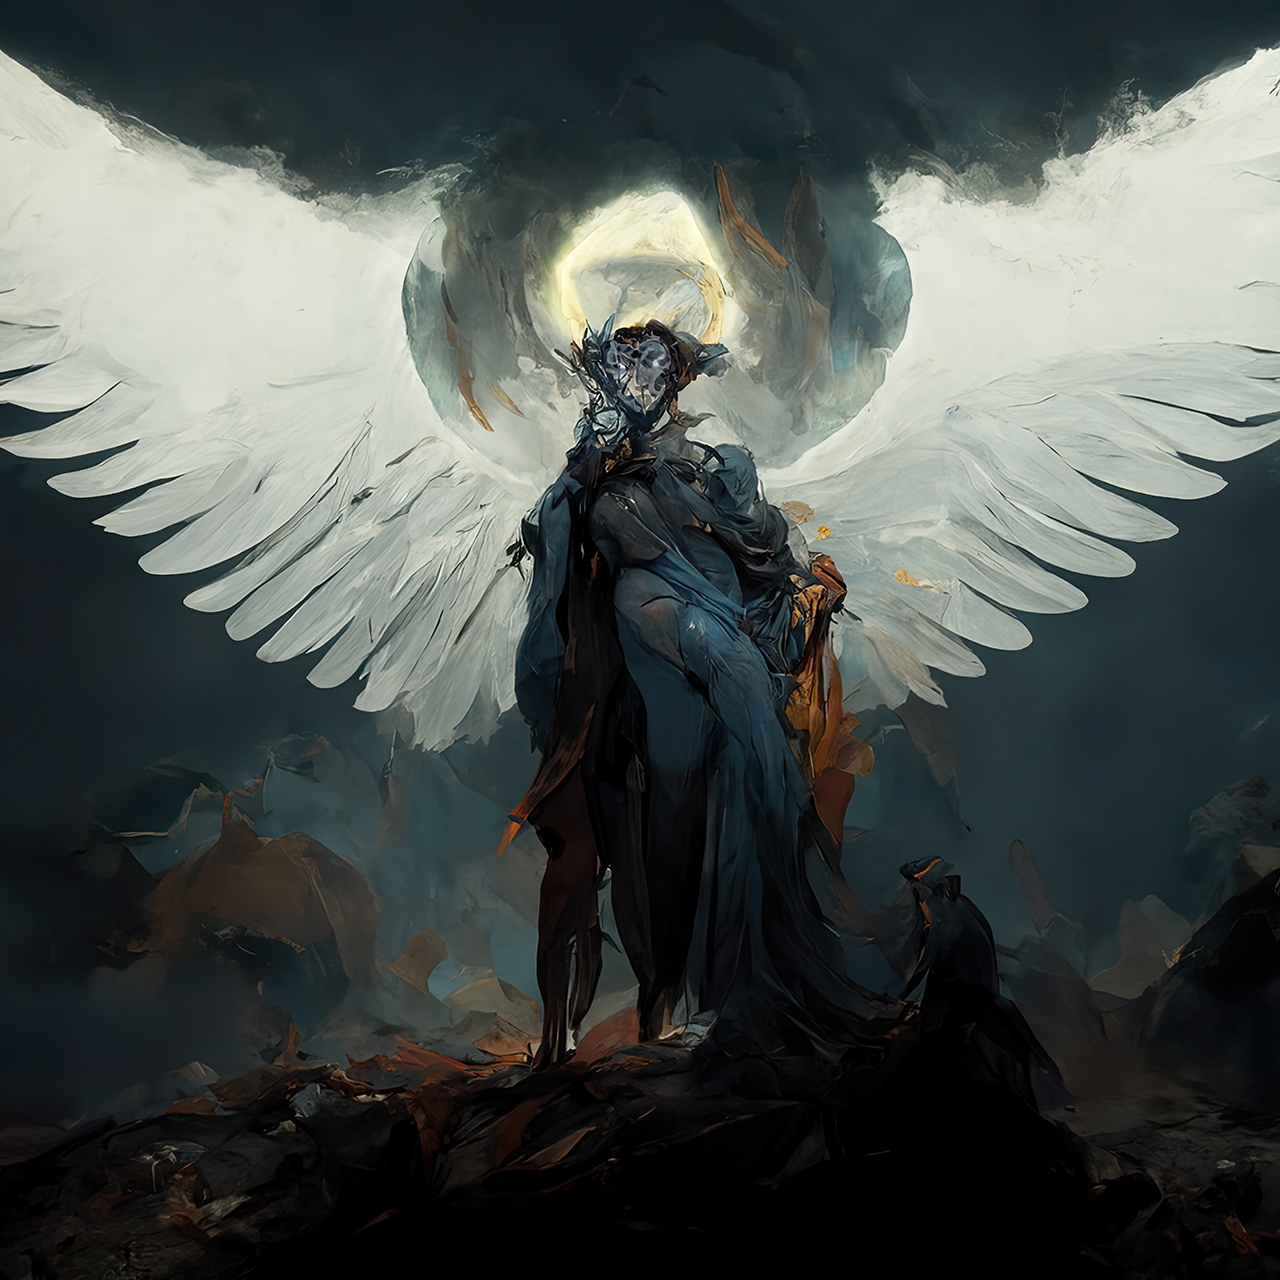 Angel of reflection by Ururuty on DeviantArt